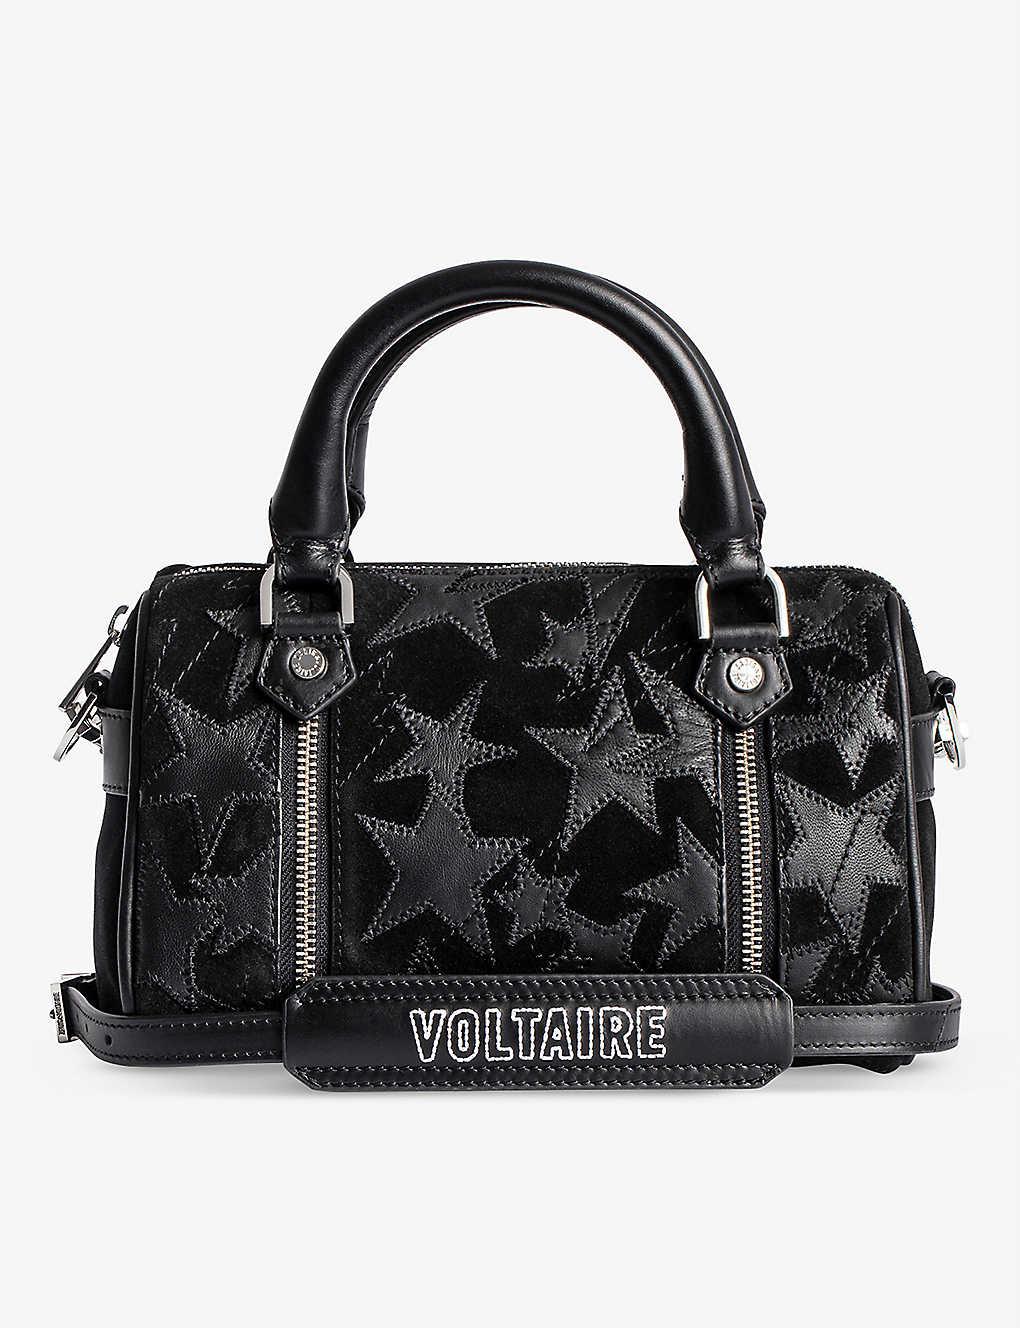 Zadig & Voltaire Authenticated Handbag